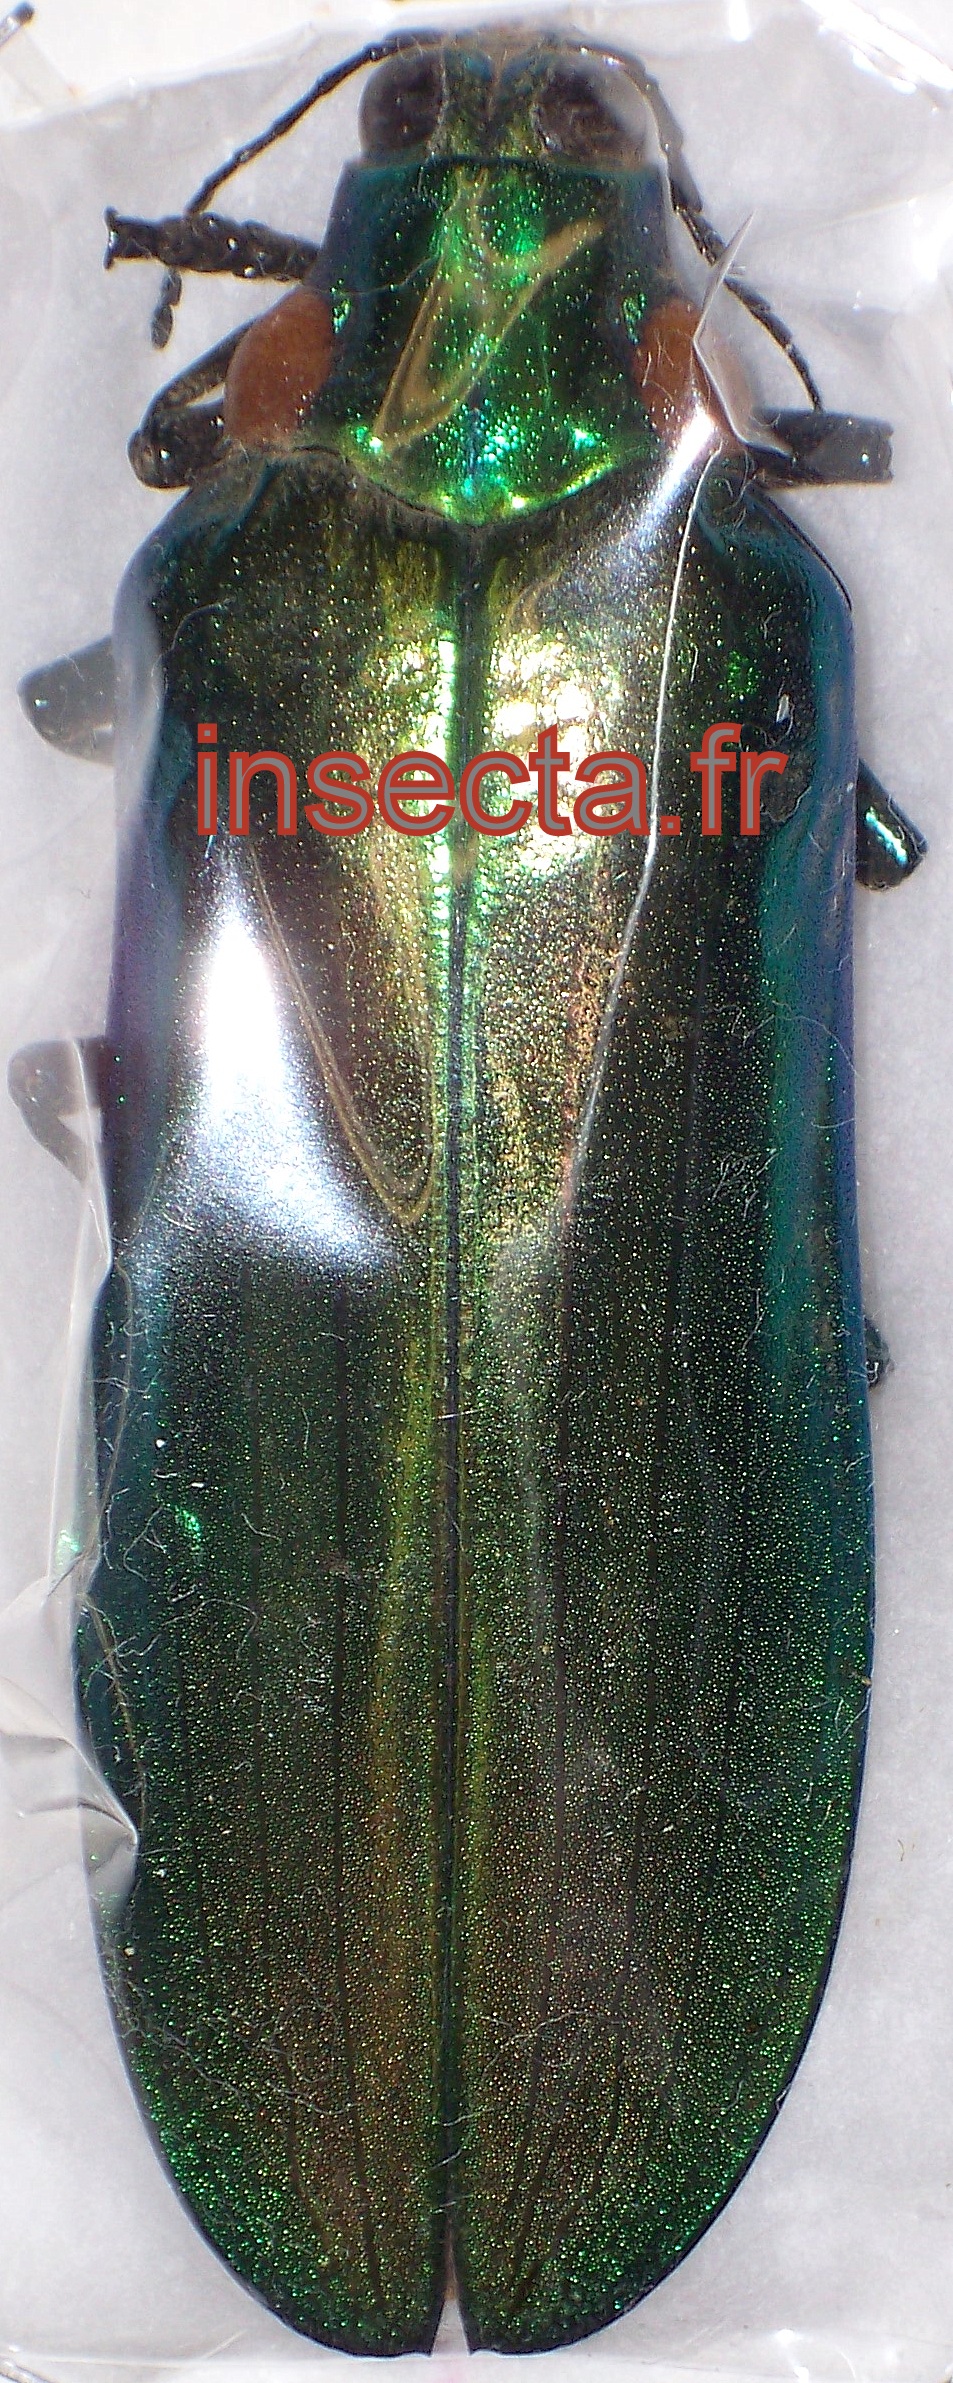 Megaloxantha bicolor nishiyamai 64-65mm